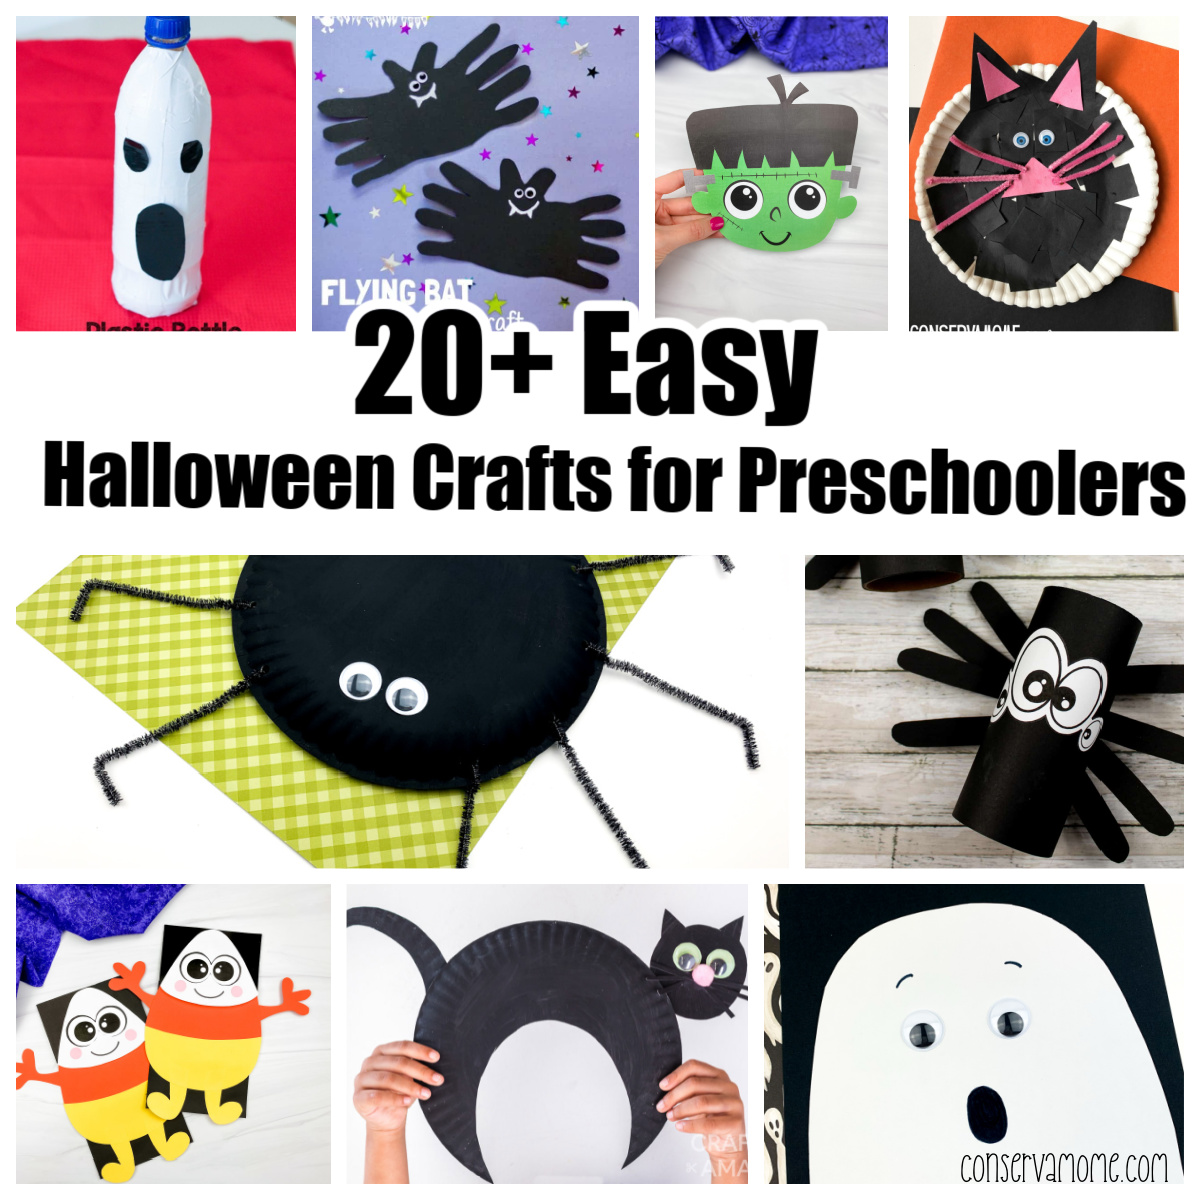 20+ Easy Halloween Crafts for Preschoolers - ConservaMom